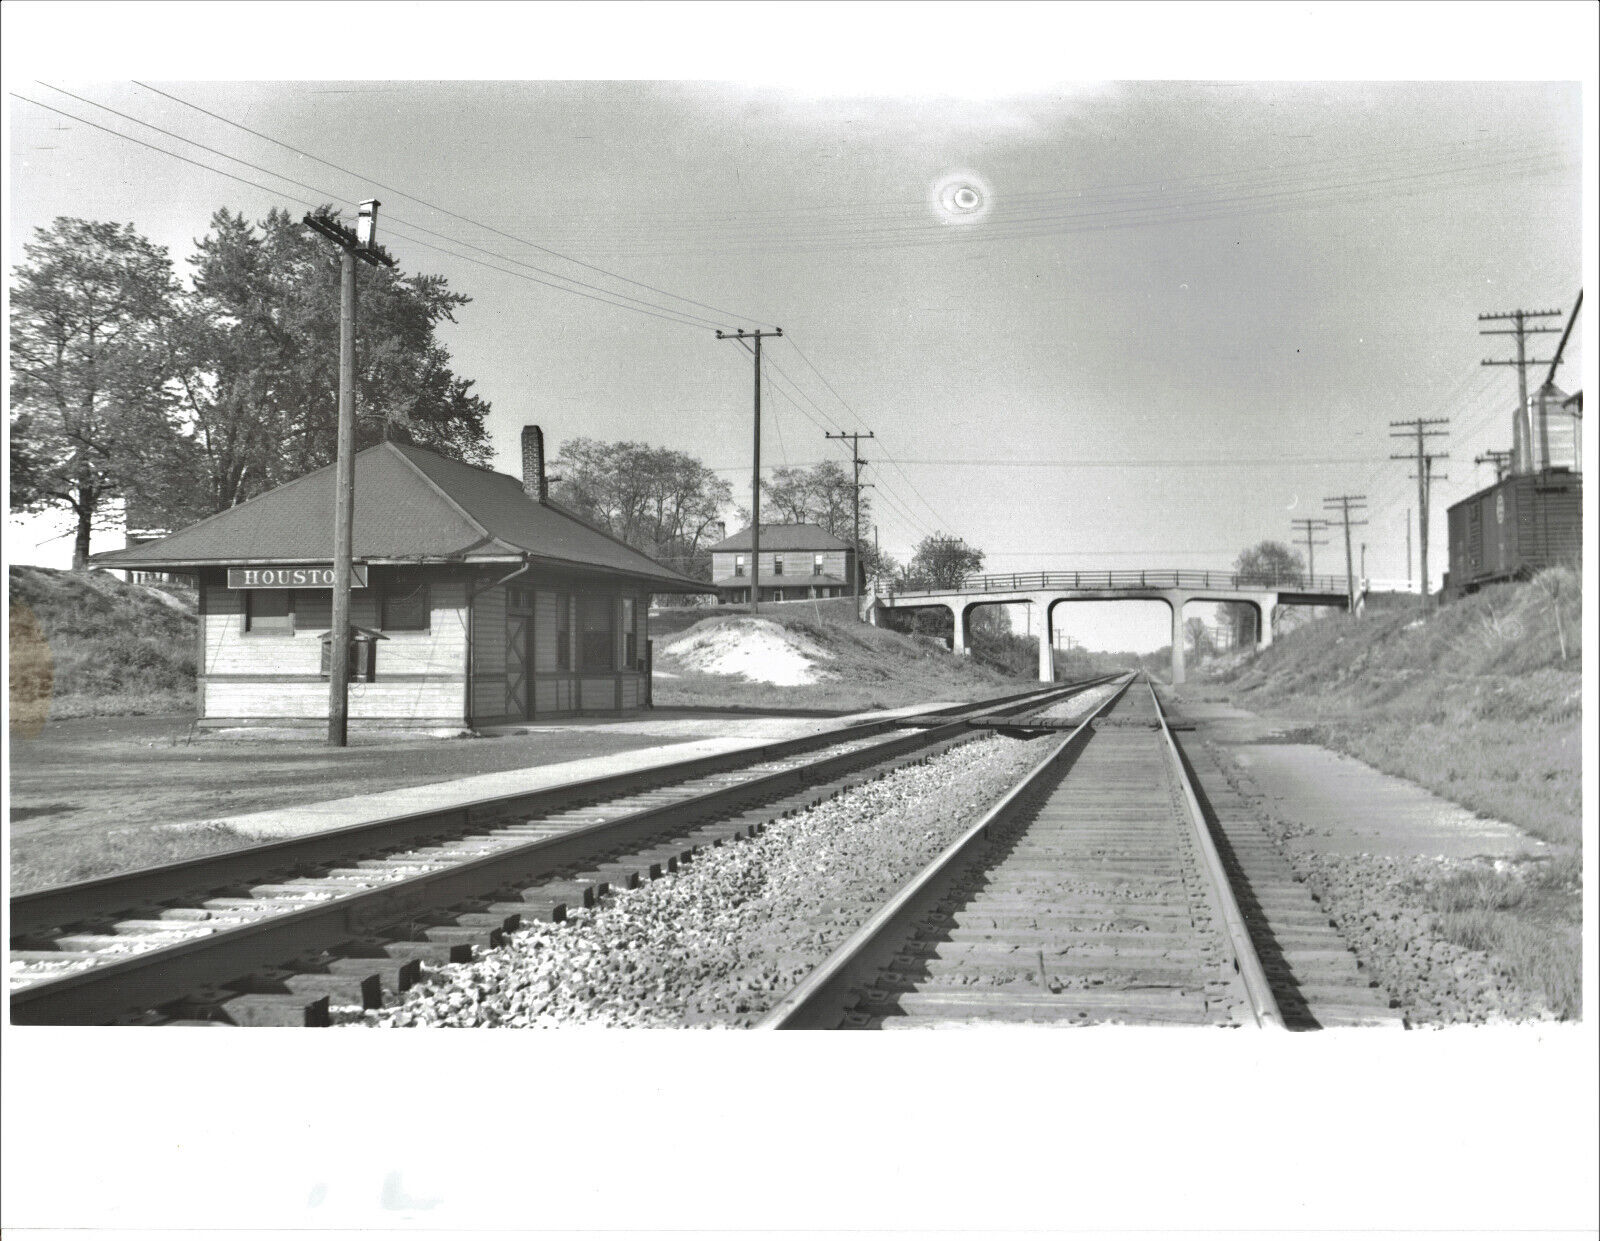 NYC CCC & StL Houston Ohio main line frame station 1953 C. E. Helms photo